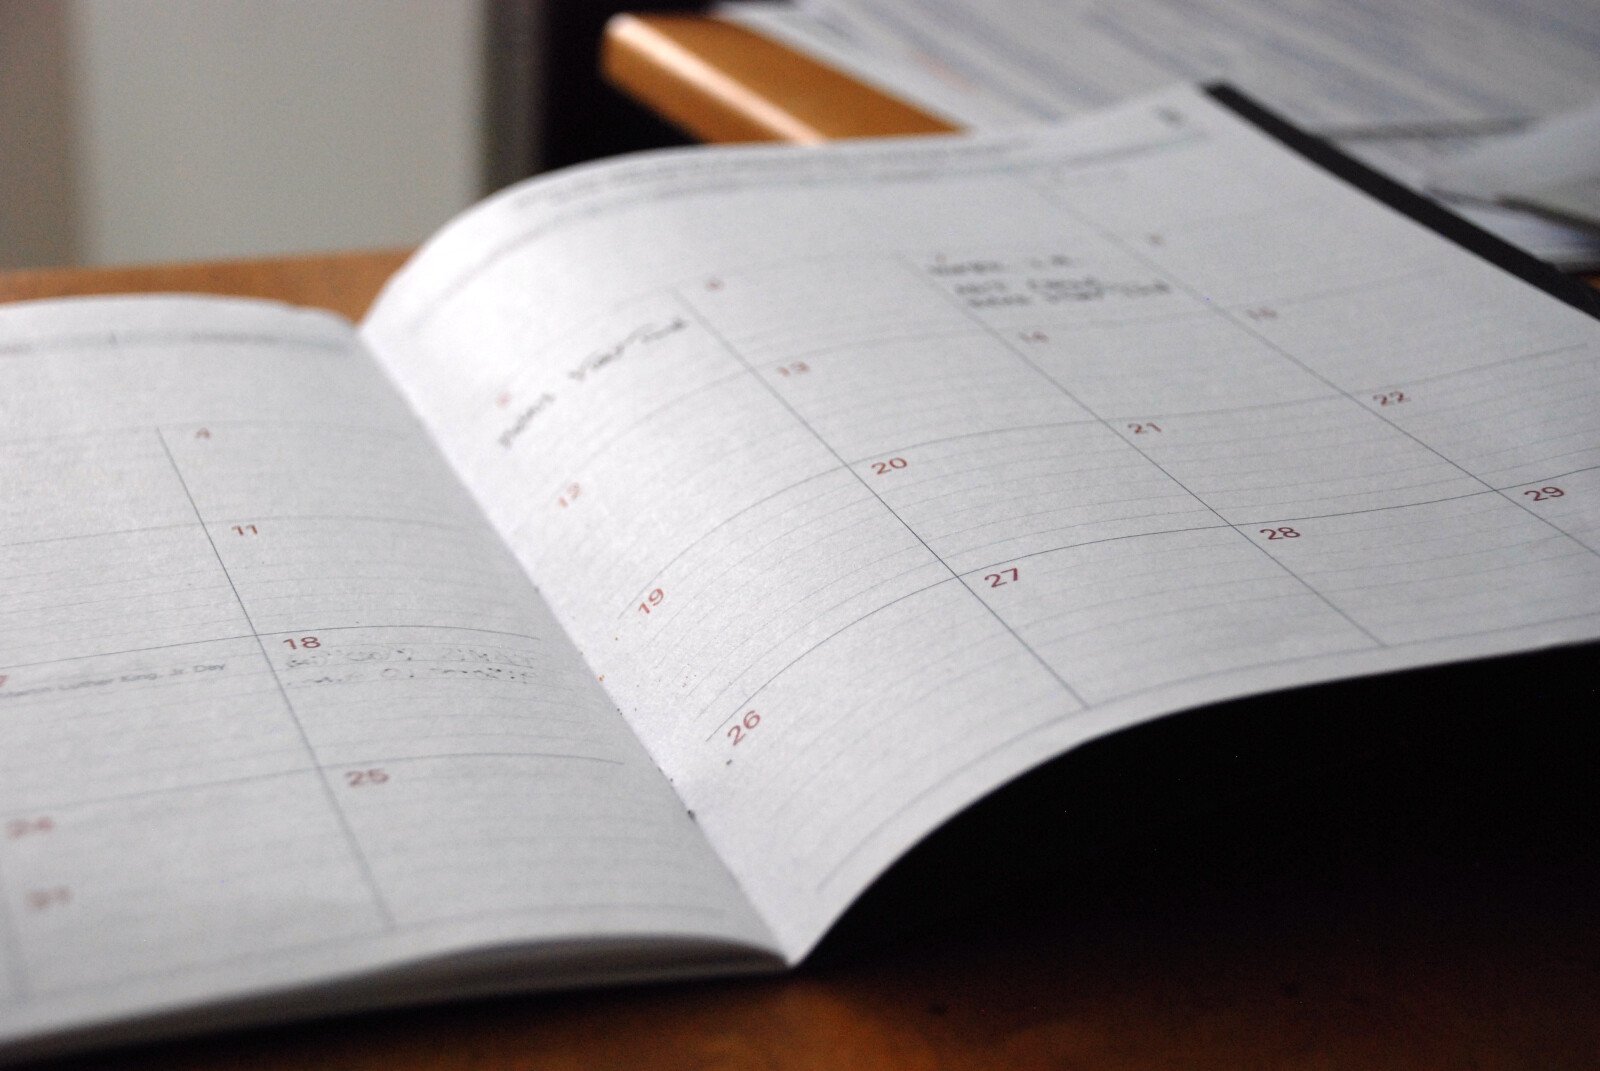 Church Event Planning Calendar on Table